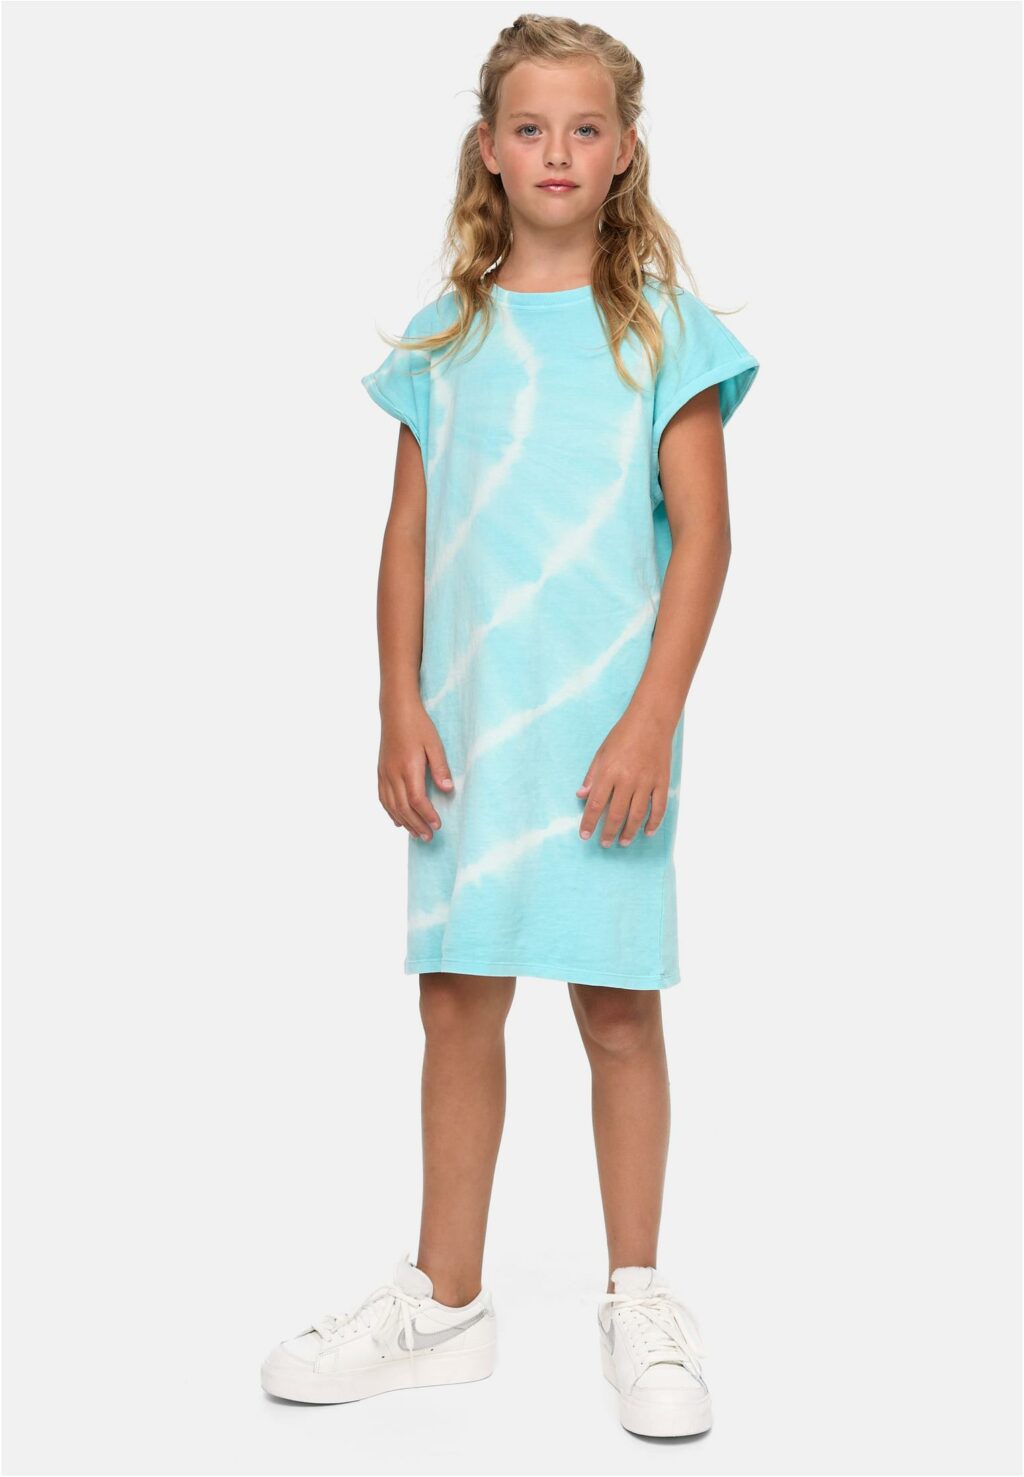 Girls Tie Dye Dress aquablue UCK3448